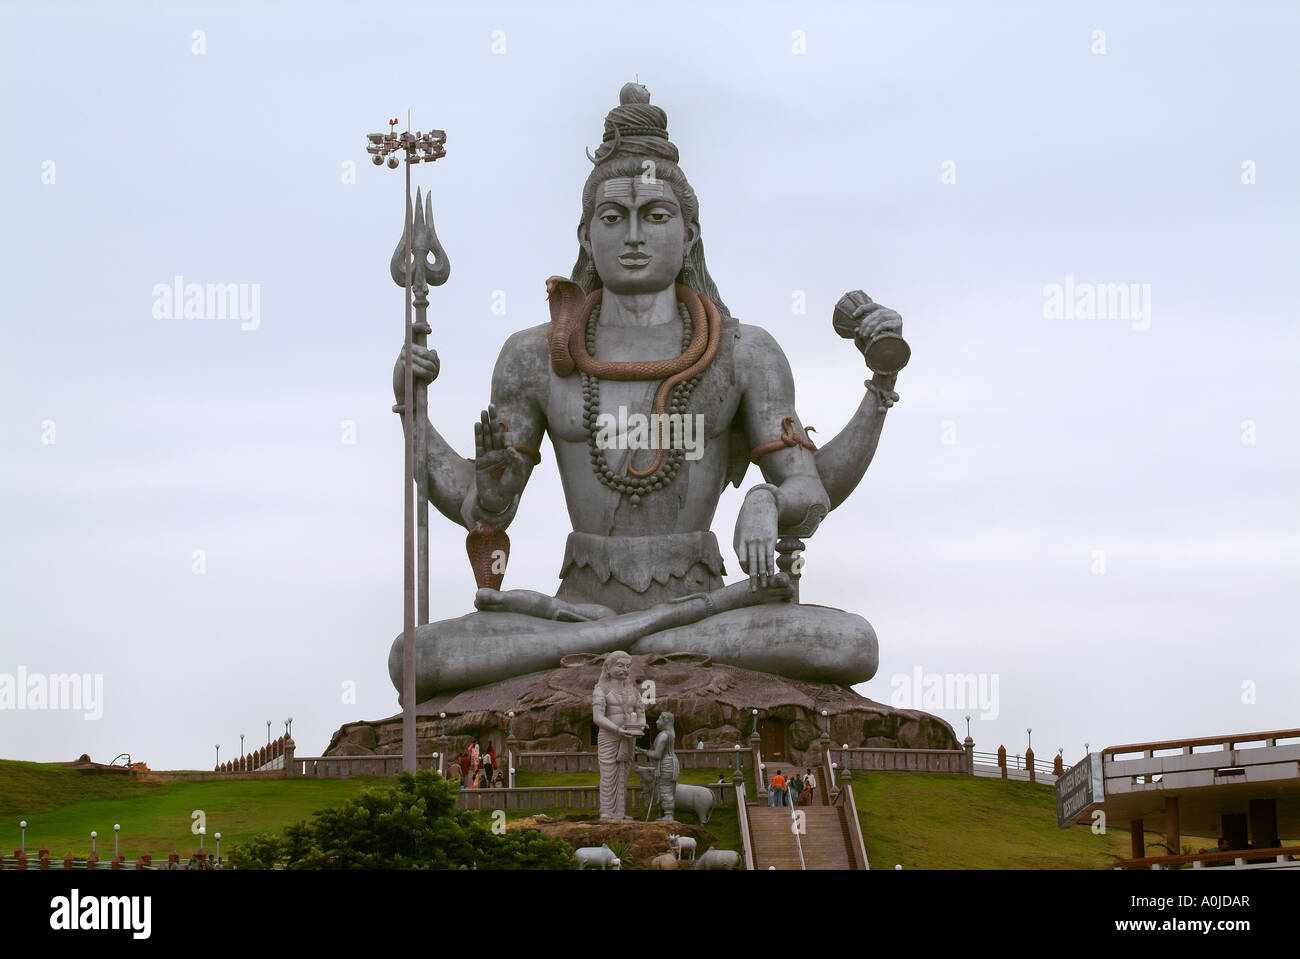 One of the Largest statue of Lord Shiva, Murudeshwar, India. Stock Photo